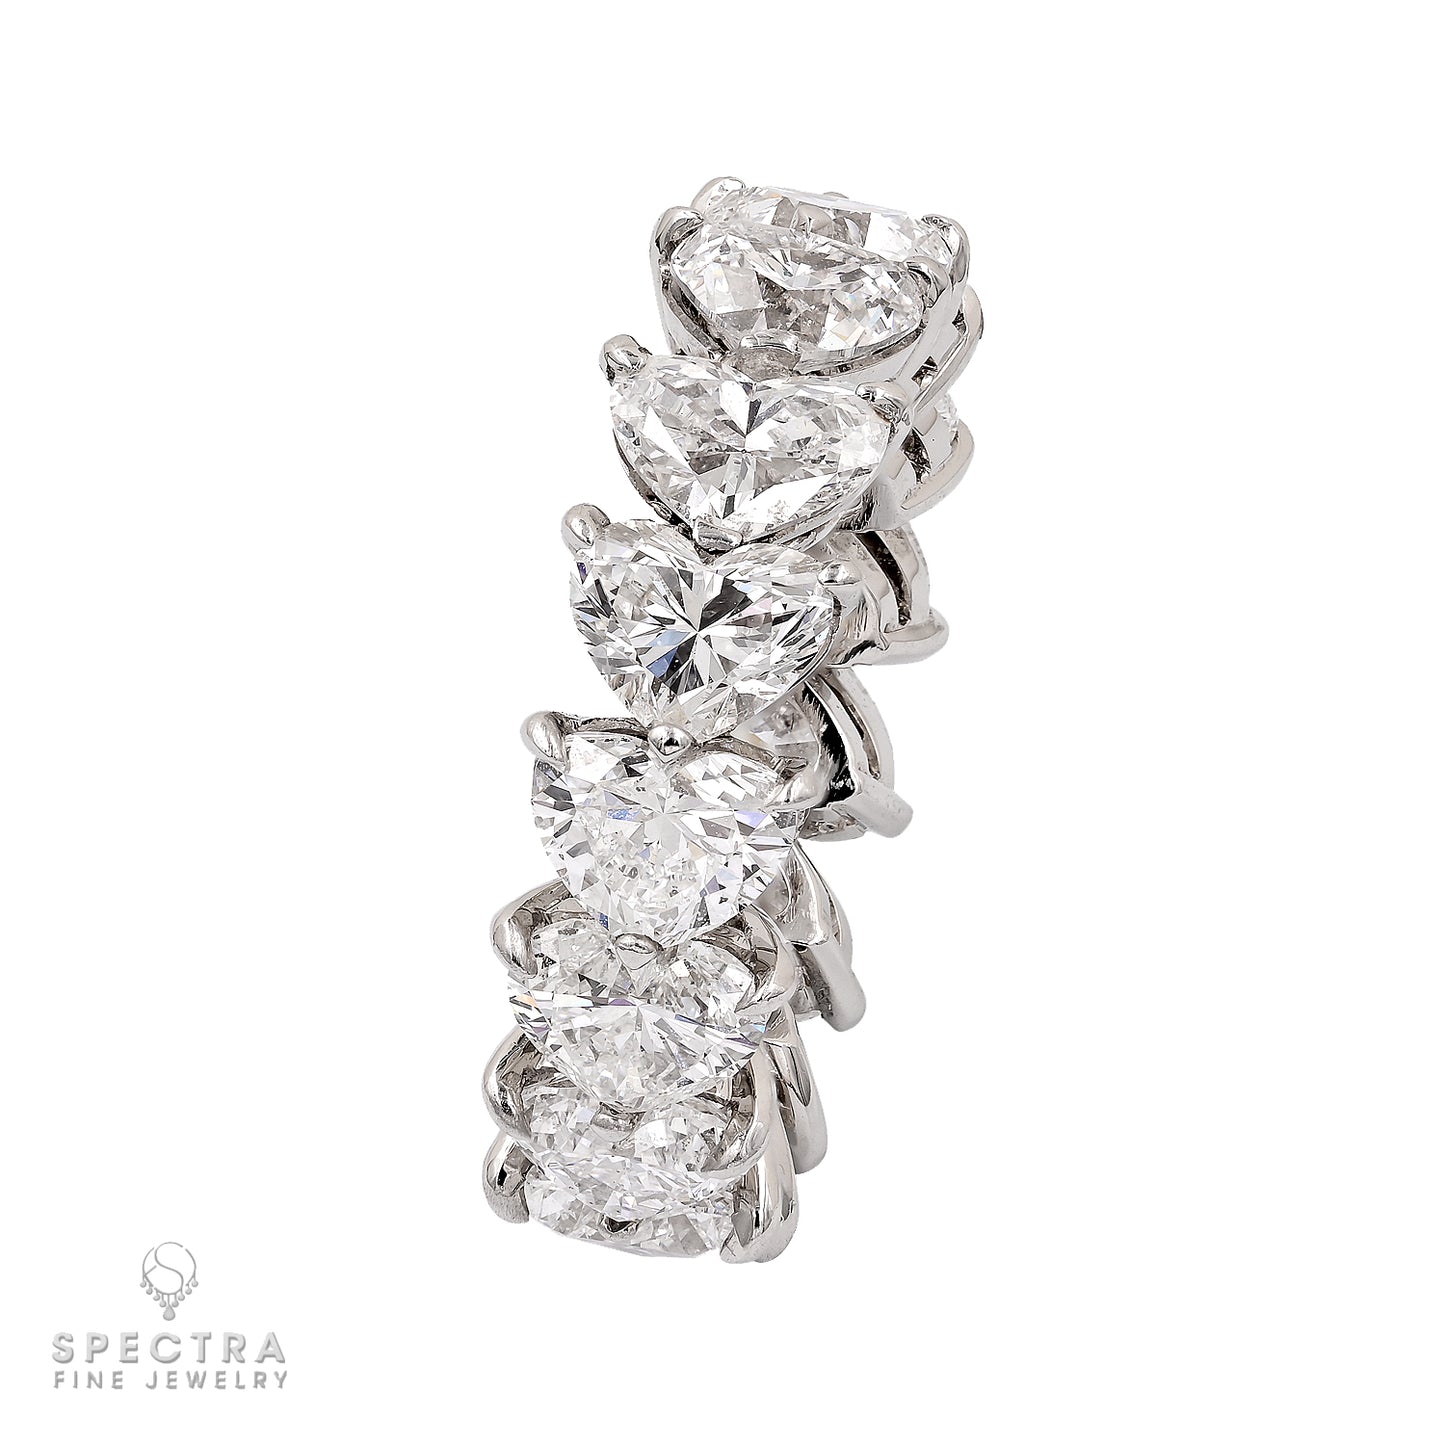 Spectra Fine Jewelry 11.13 cts. Heart-Shaped Diamond Eternity Band Wedding Ring